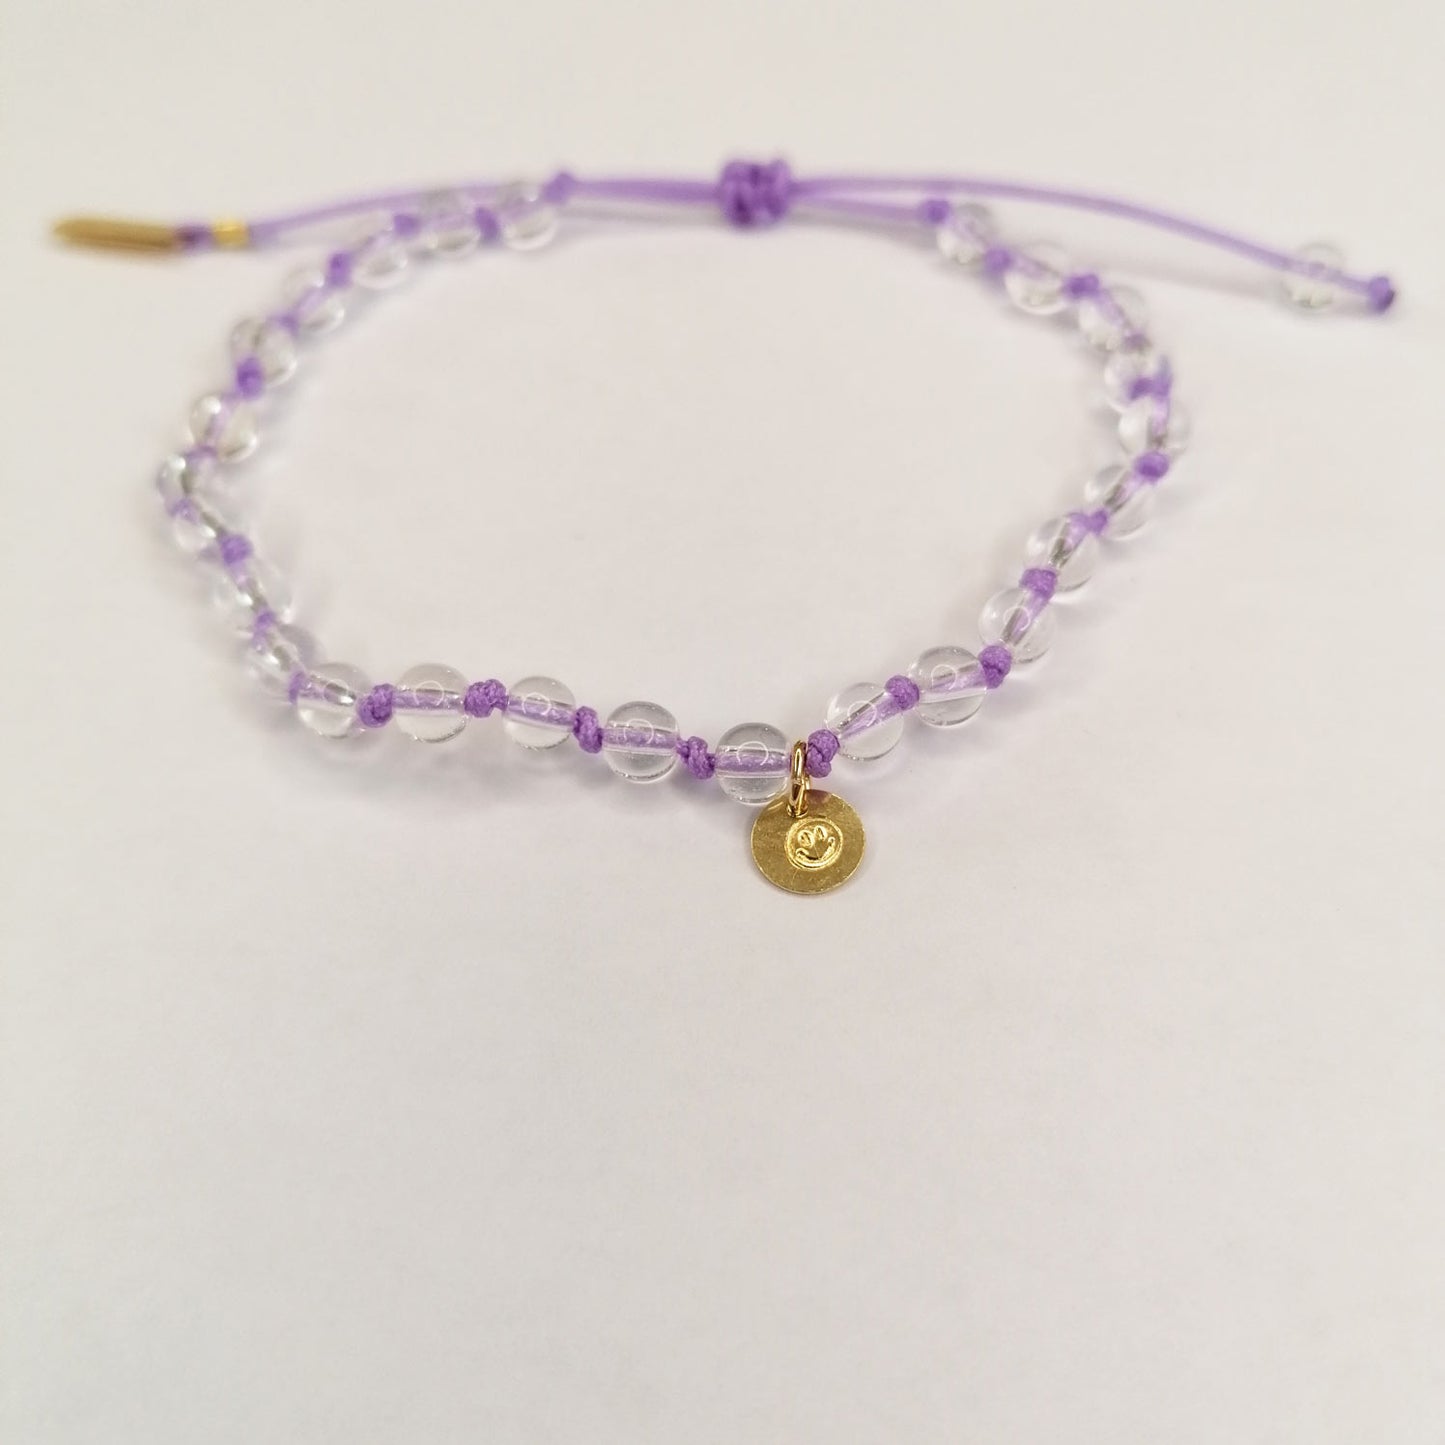 Edelstein Armband in lila mit Smiley Charm | pia norden